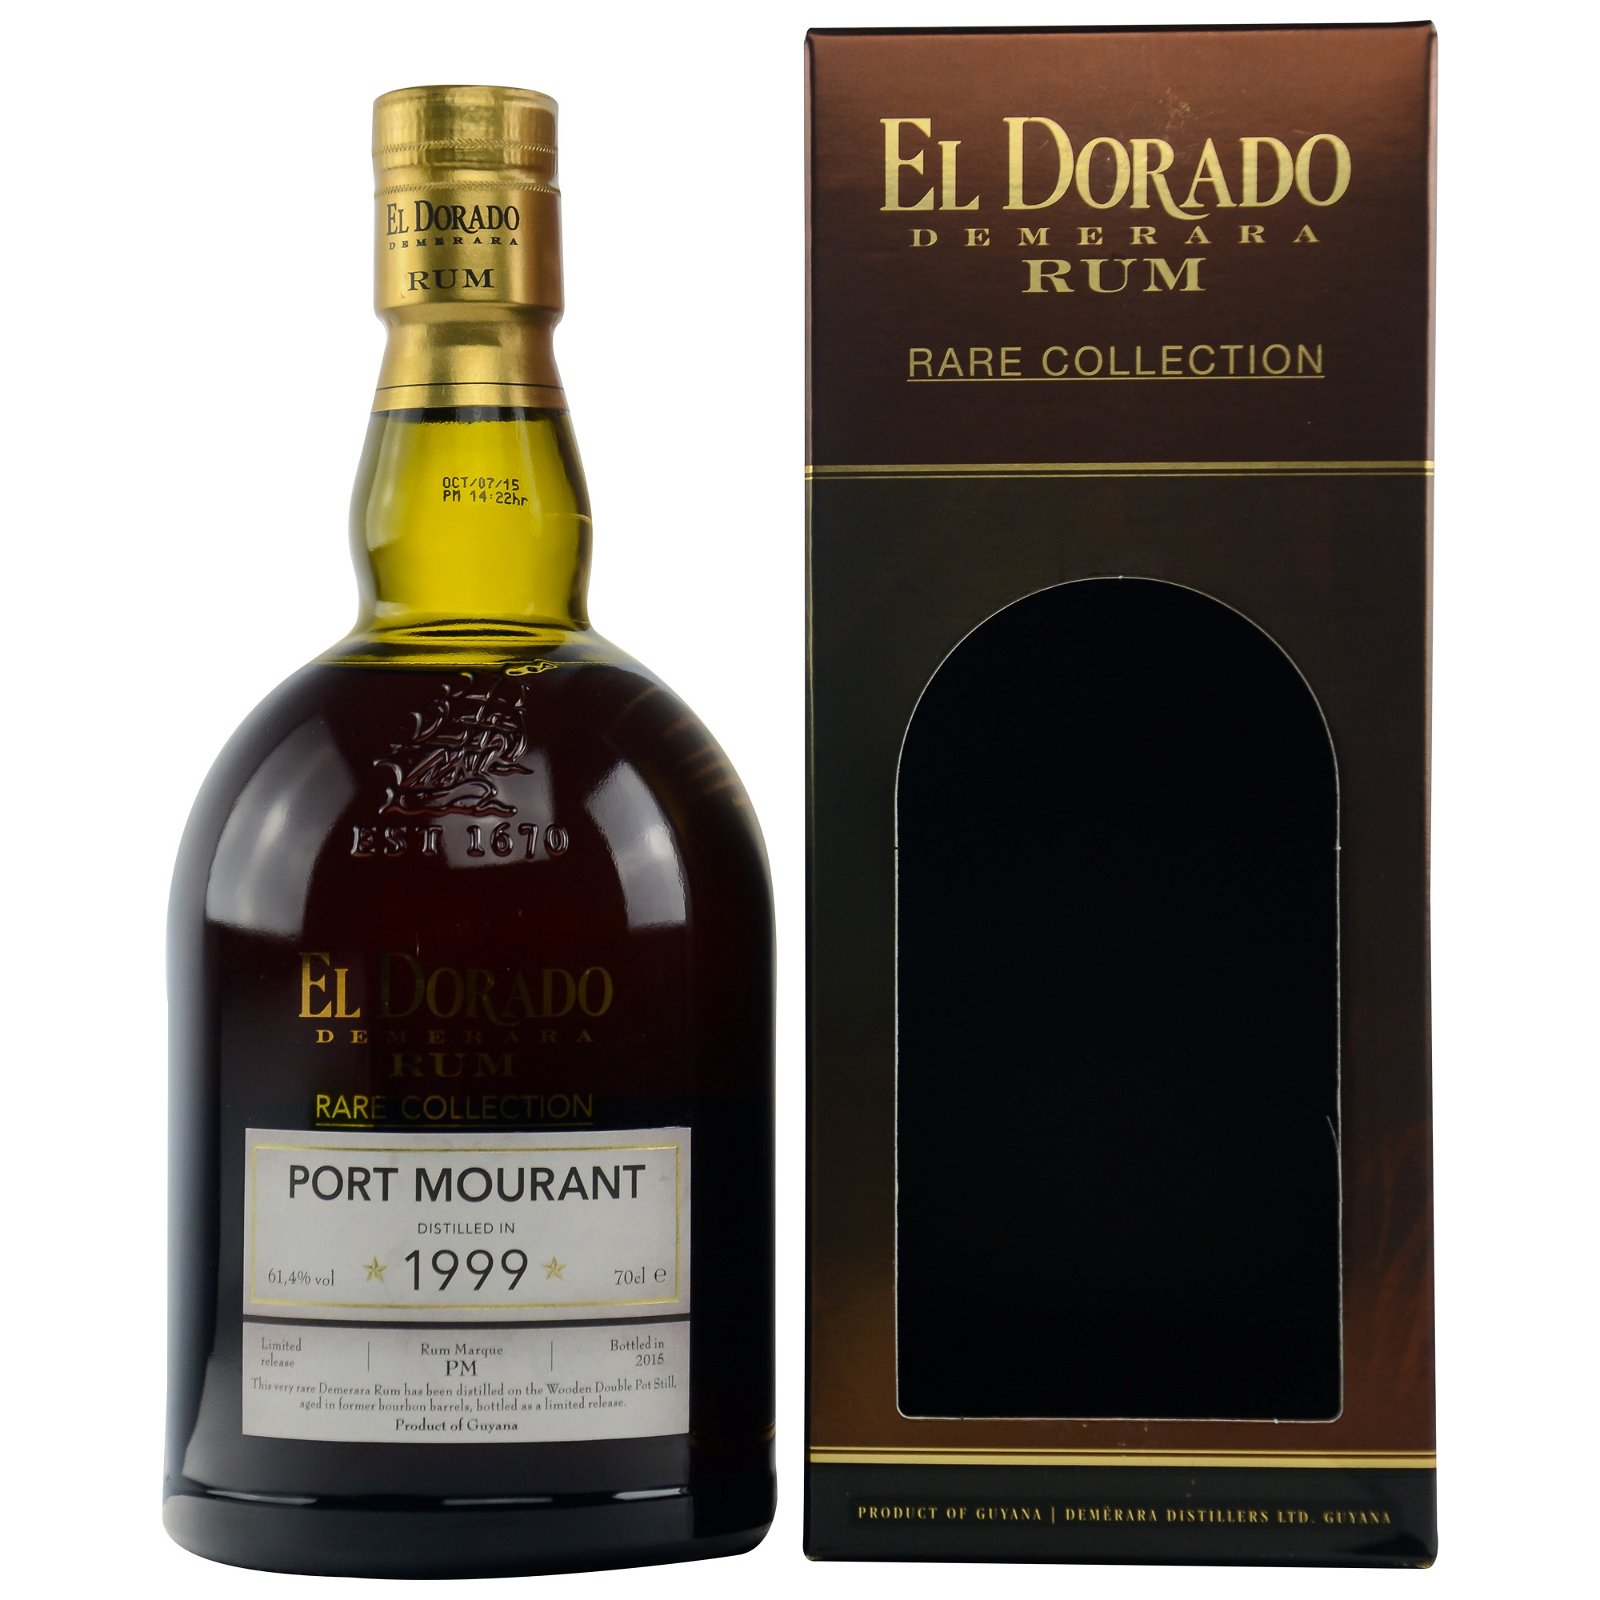 El Dorado 1999/2015 Rare Collection Port Mourant (Rum) (Guyana)